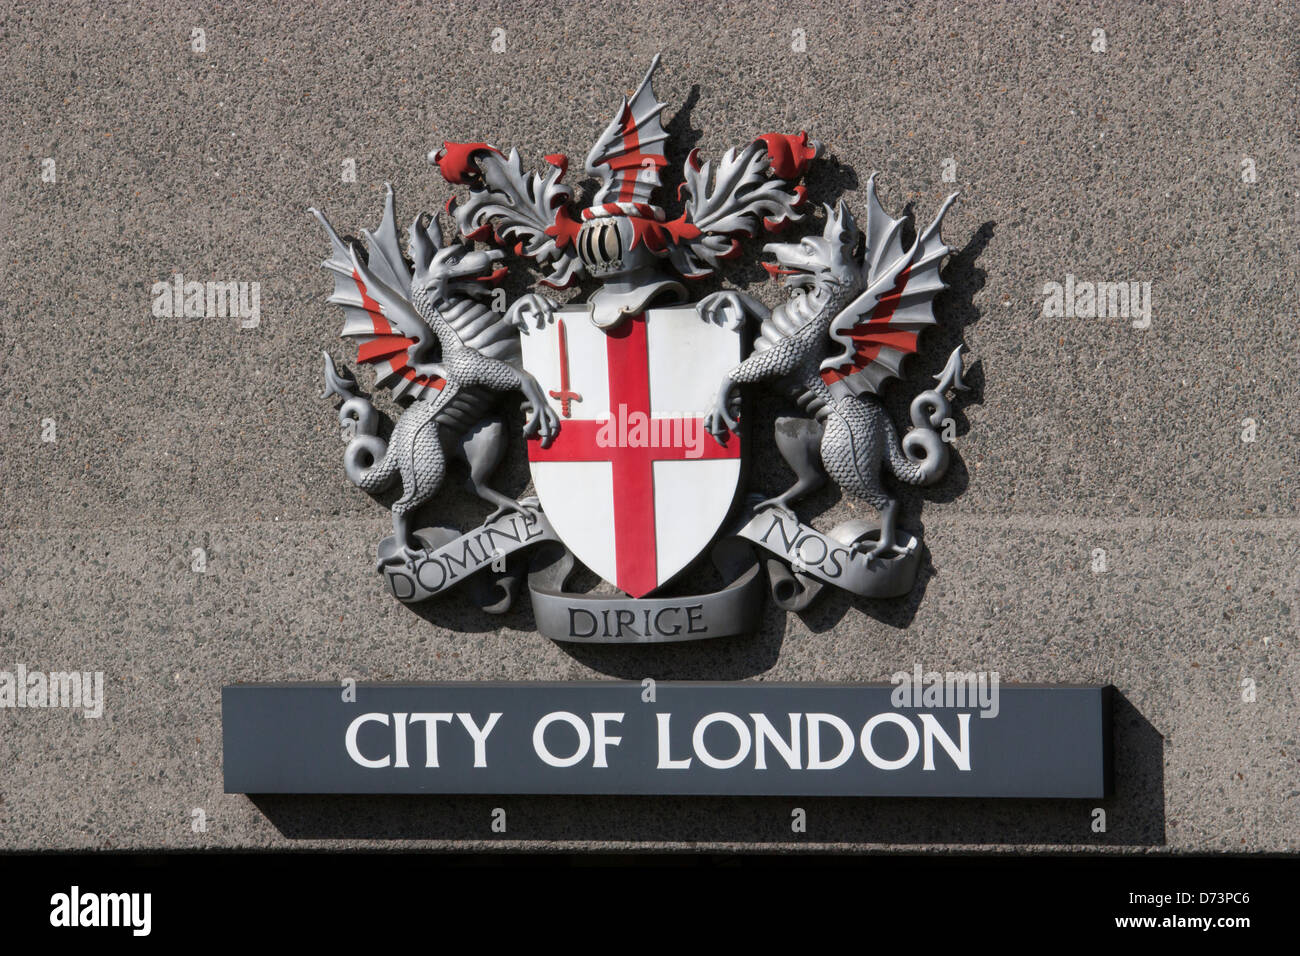 Domine nos dirige city of London dragon crest Foto Stock